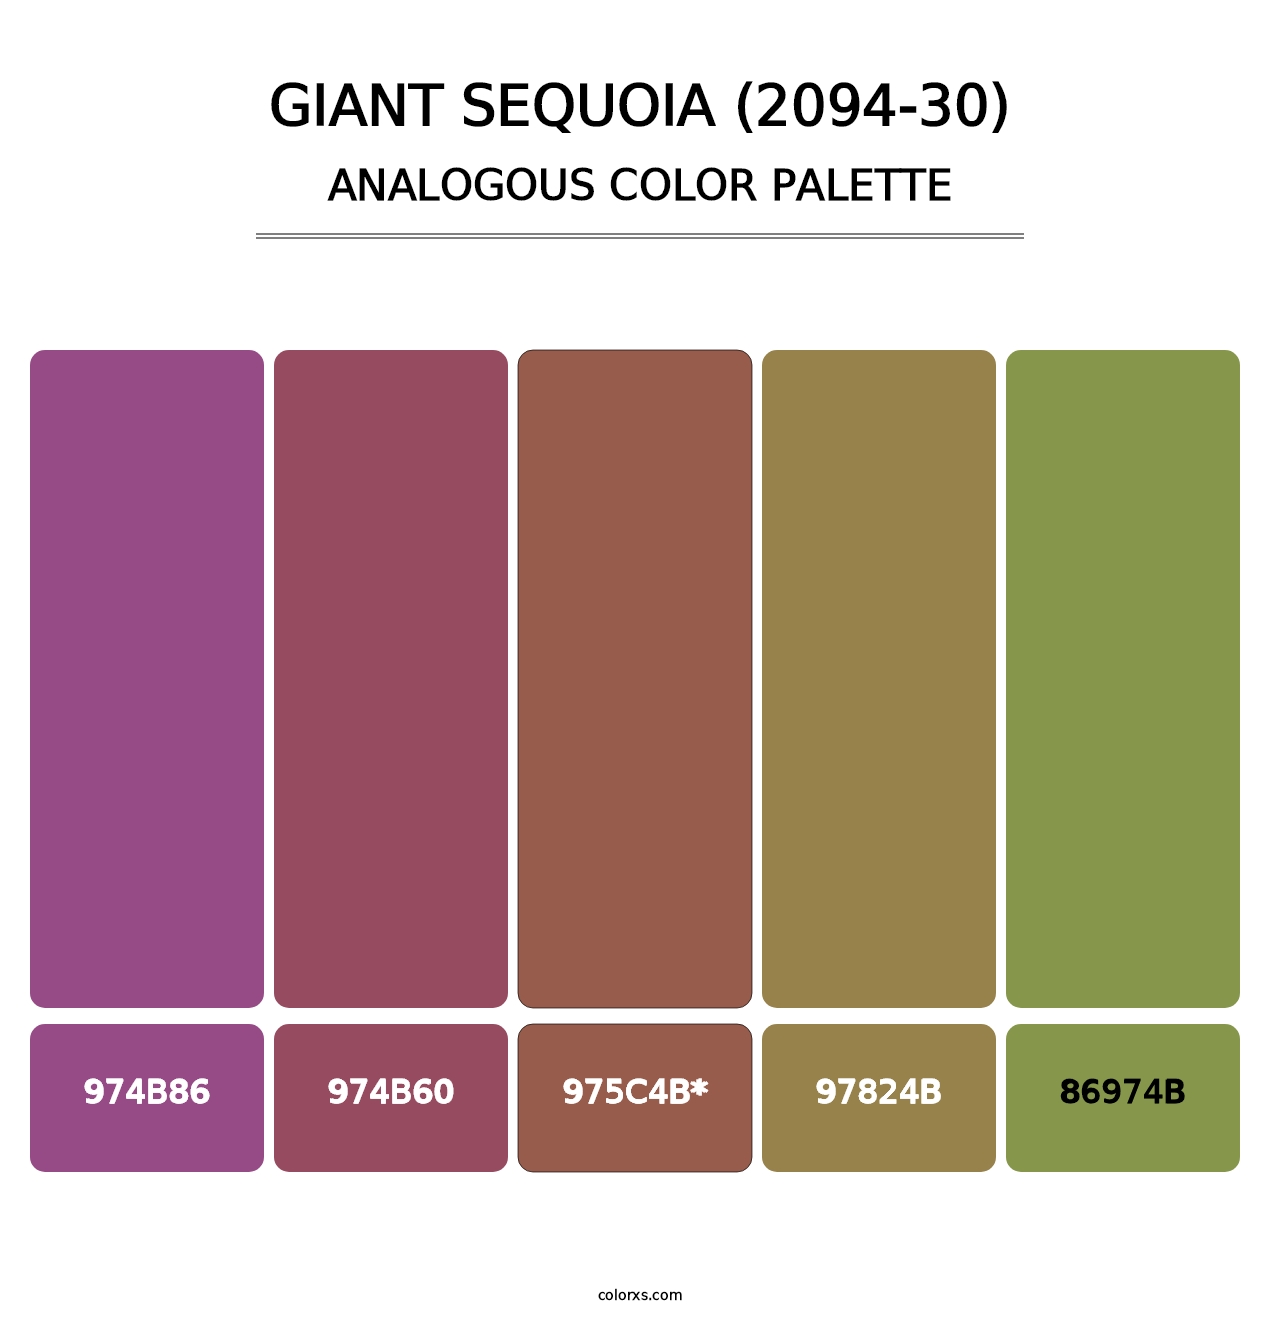 Giant Sequoia (2094-30) - Analogous Color Palette